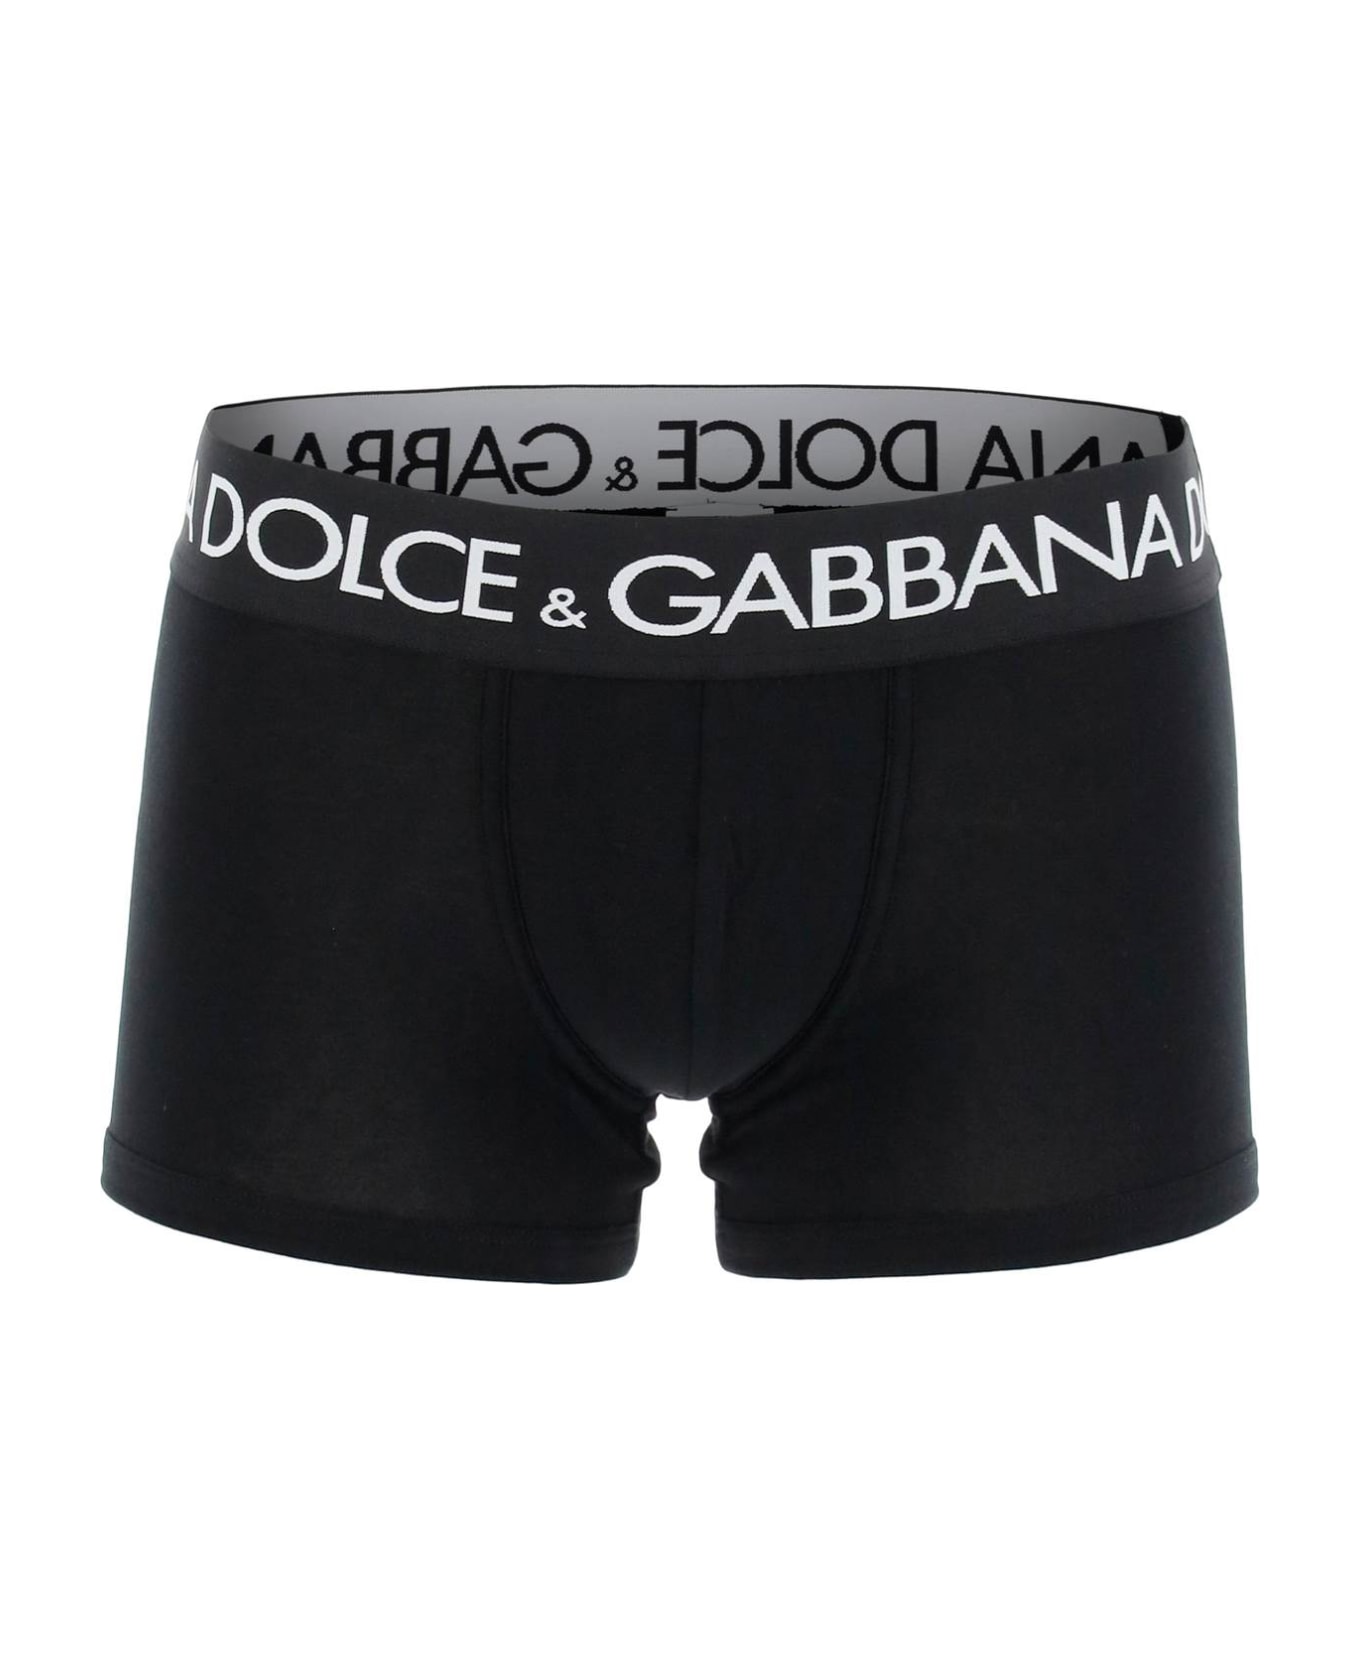 Dolce & Gabbana Bi-pack Underwear Boxer - Black